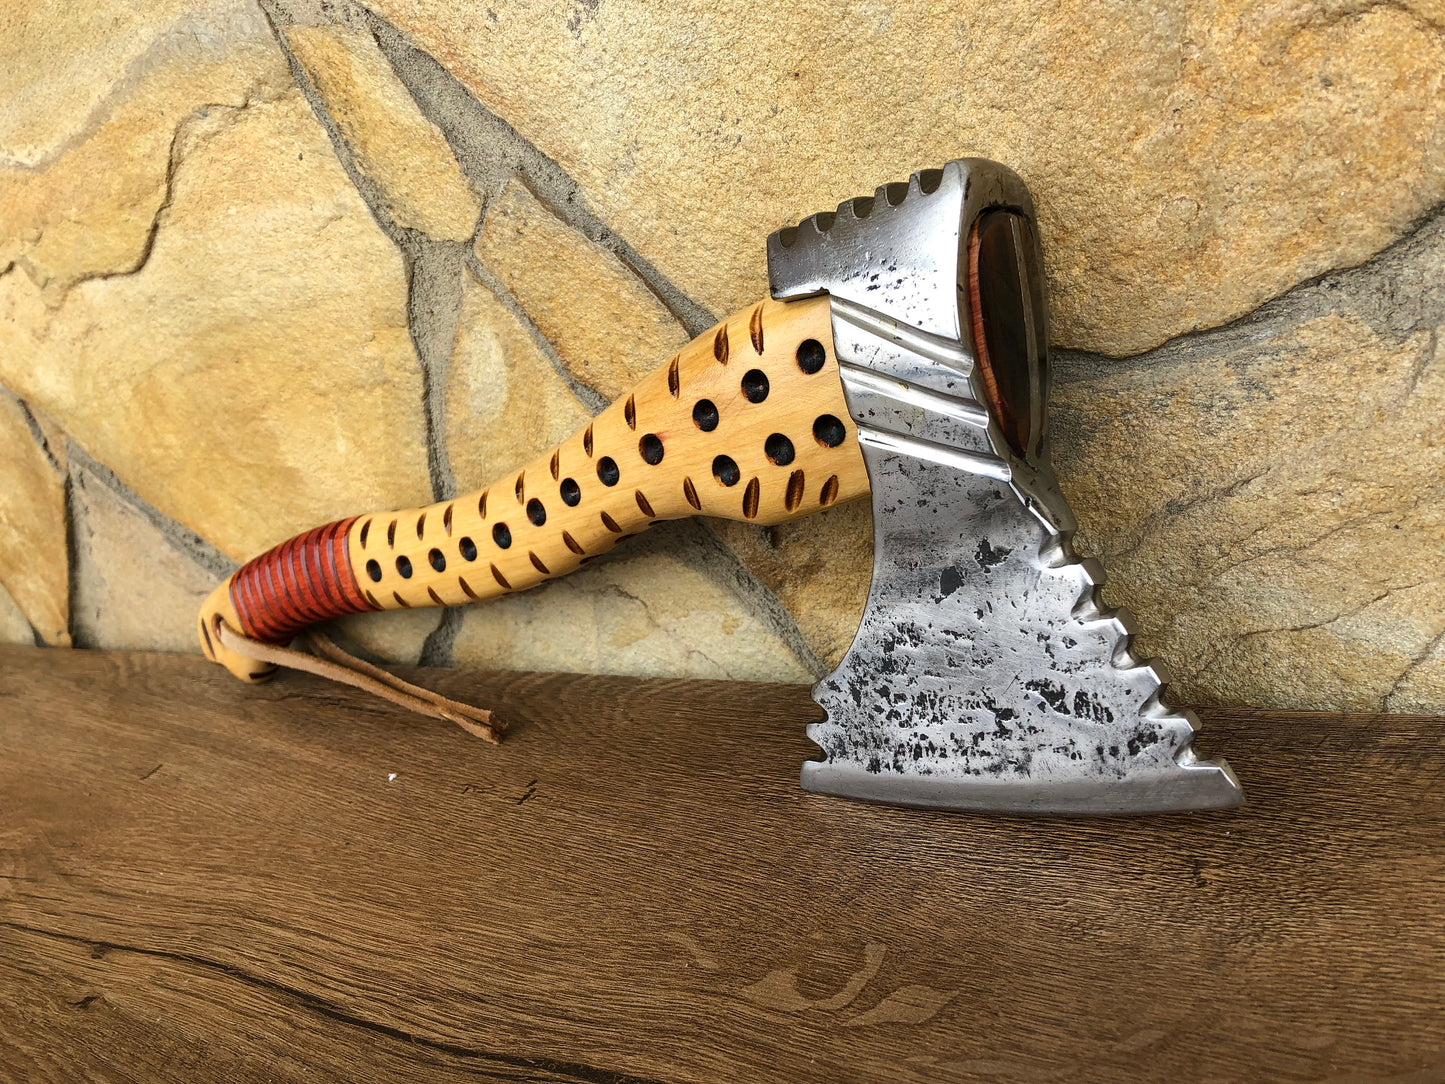 Handyman gifts, handyman tools, viking axe, tomahawk, hatchet, mens gifts, medieval axe, viking weapons, axe, viking camp kit, iron gifts